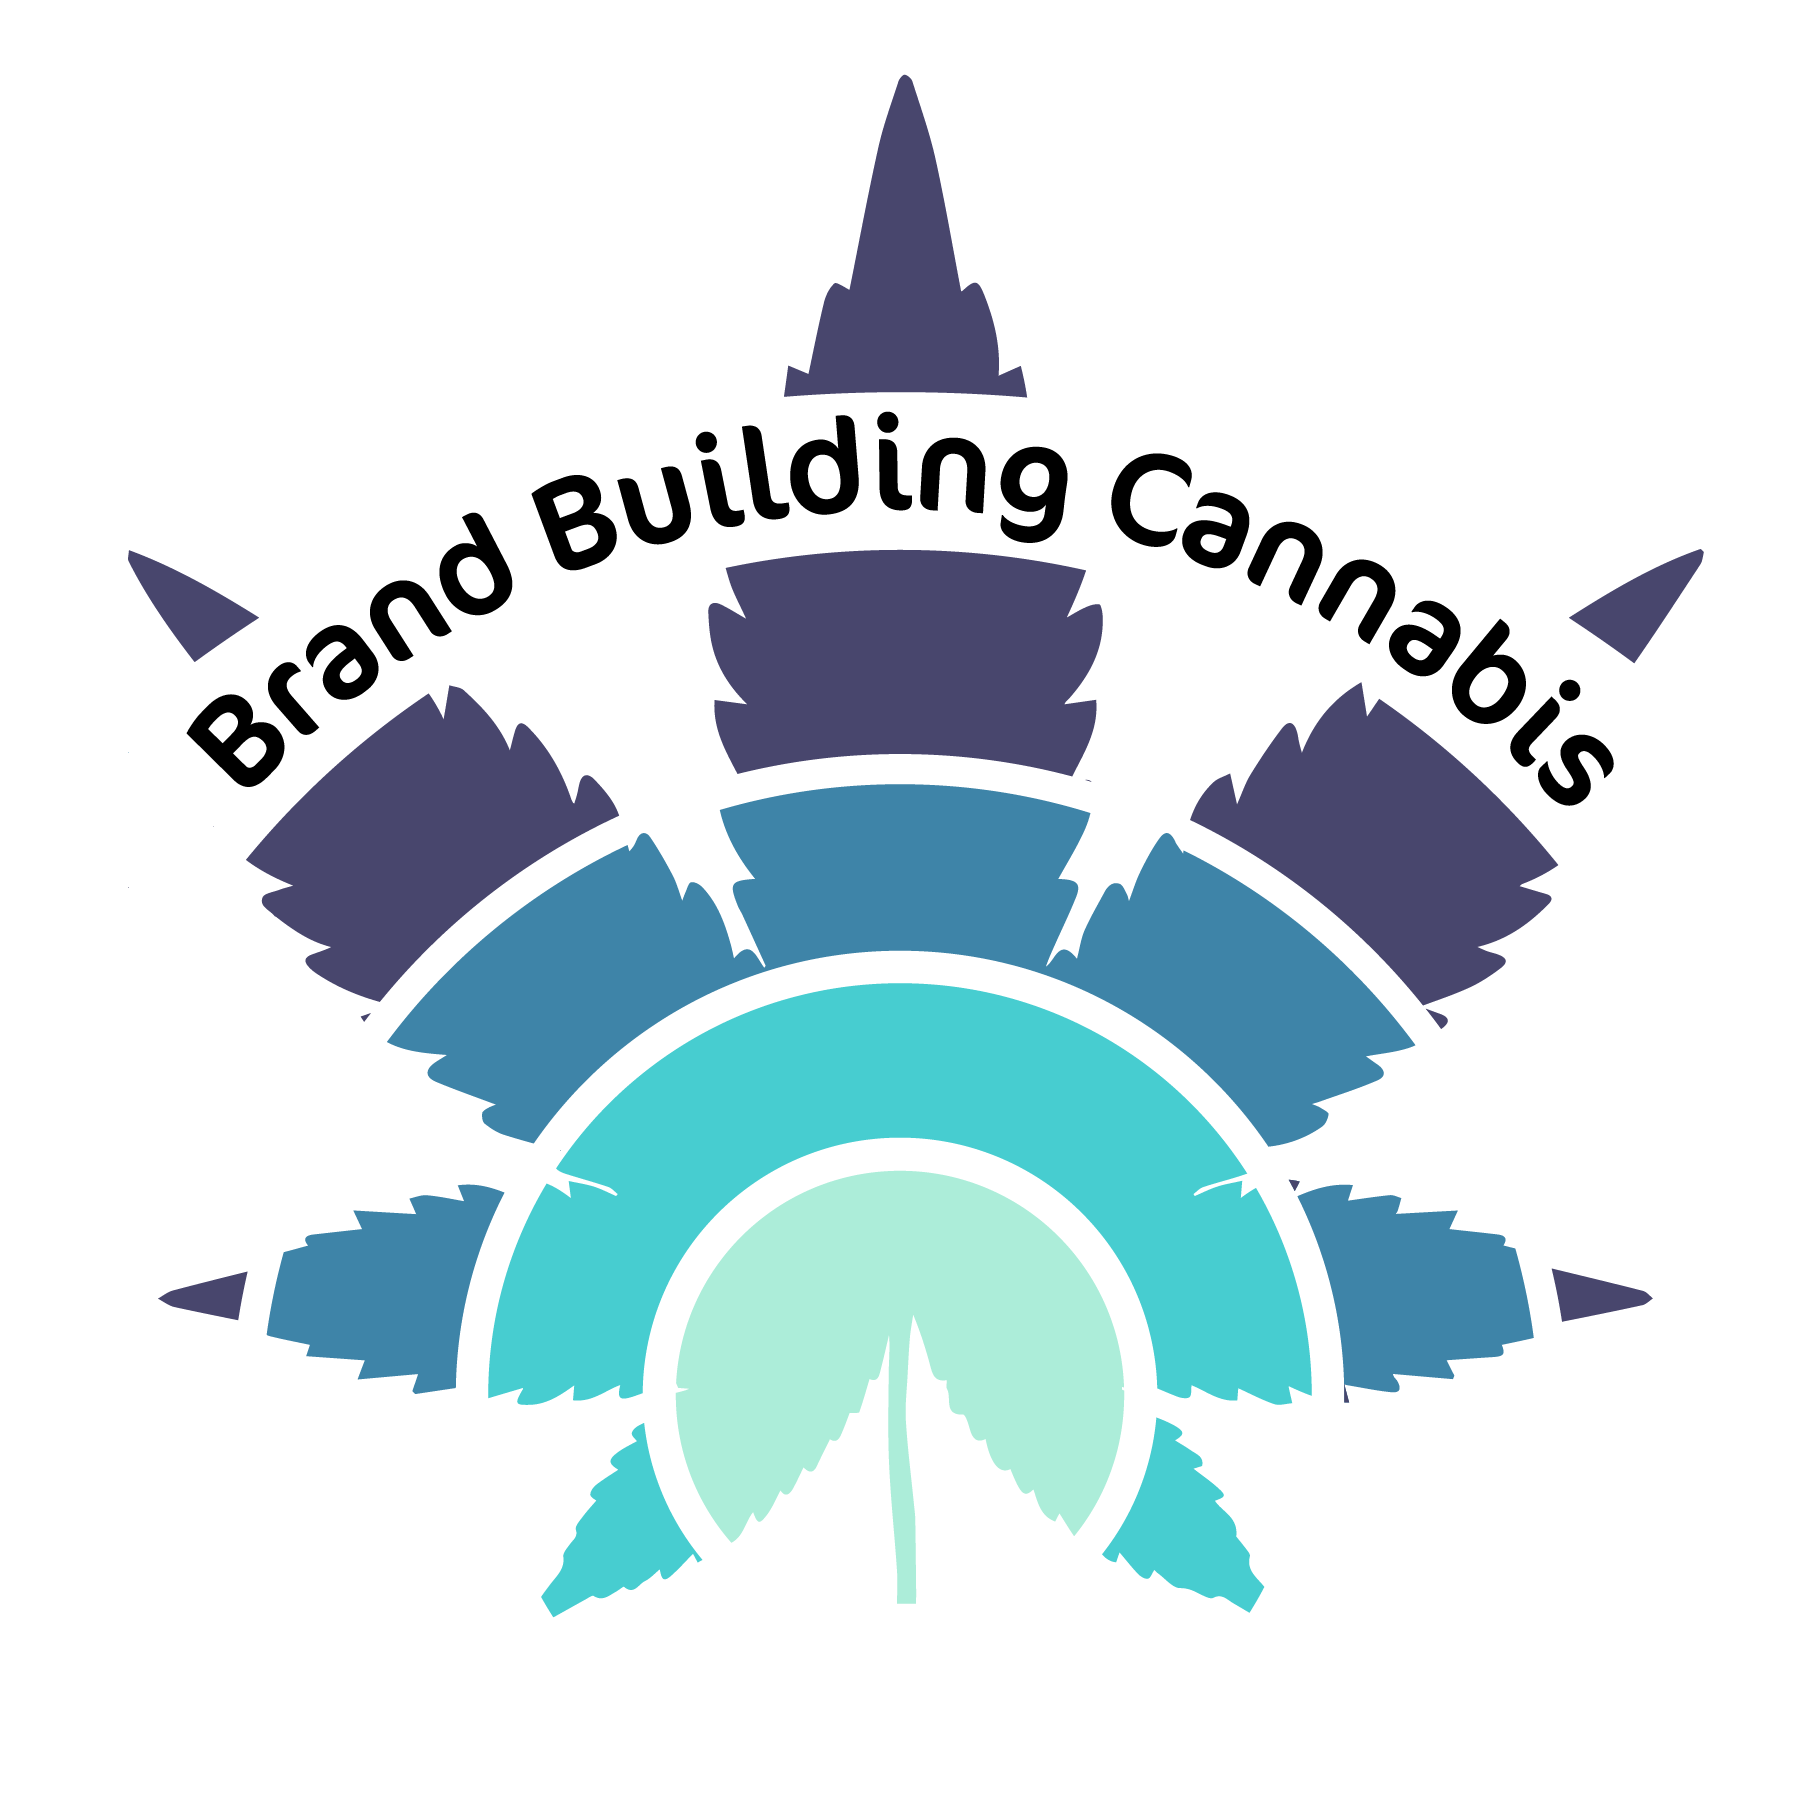 Brand Building Cannabis